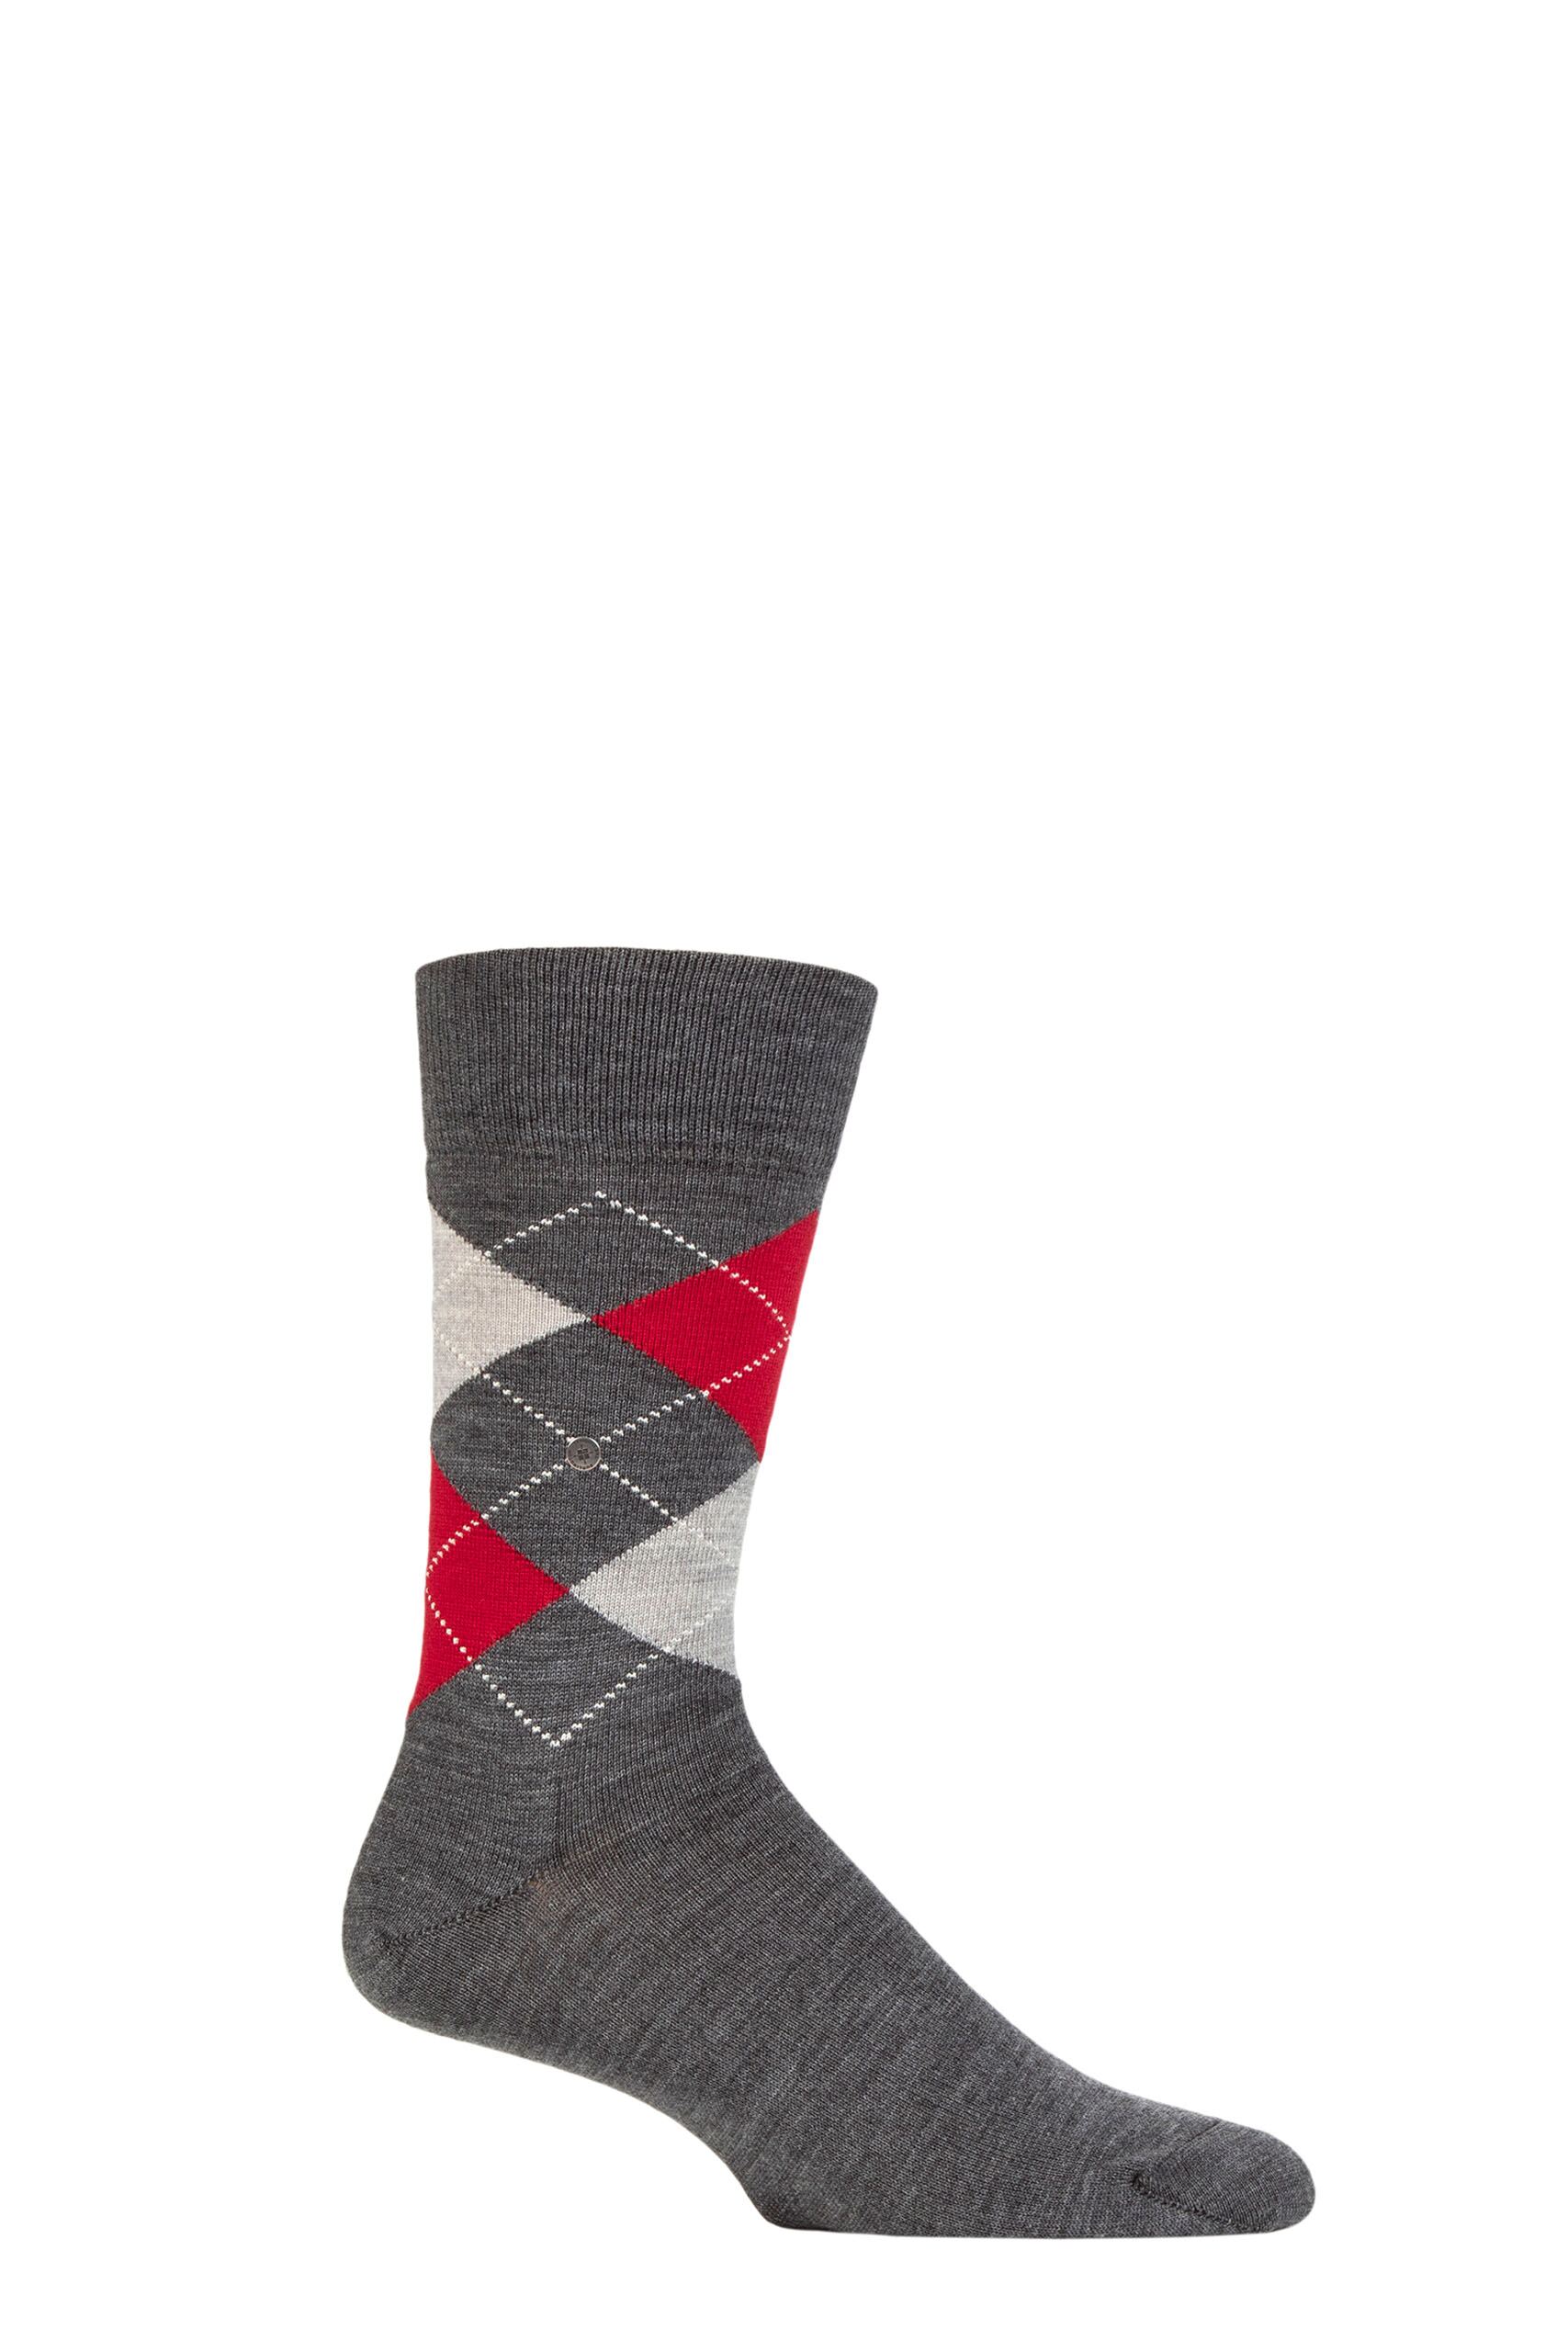 Mens 1 Pair Burlington Edinburgh Virgin Wool Argyle Socks Grey / Red 6.5-11 Mens